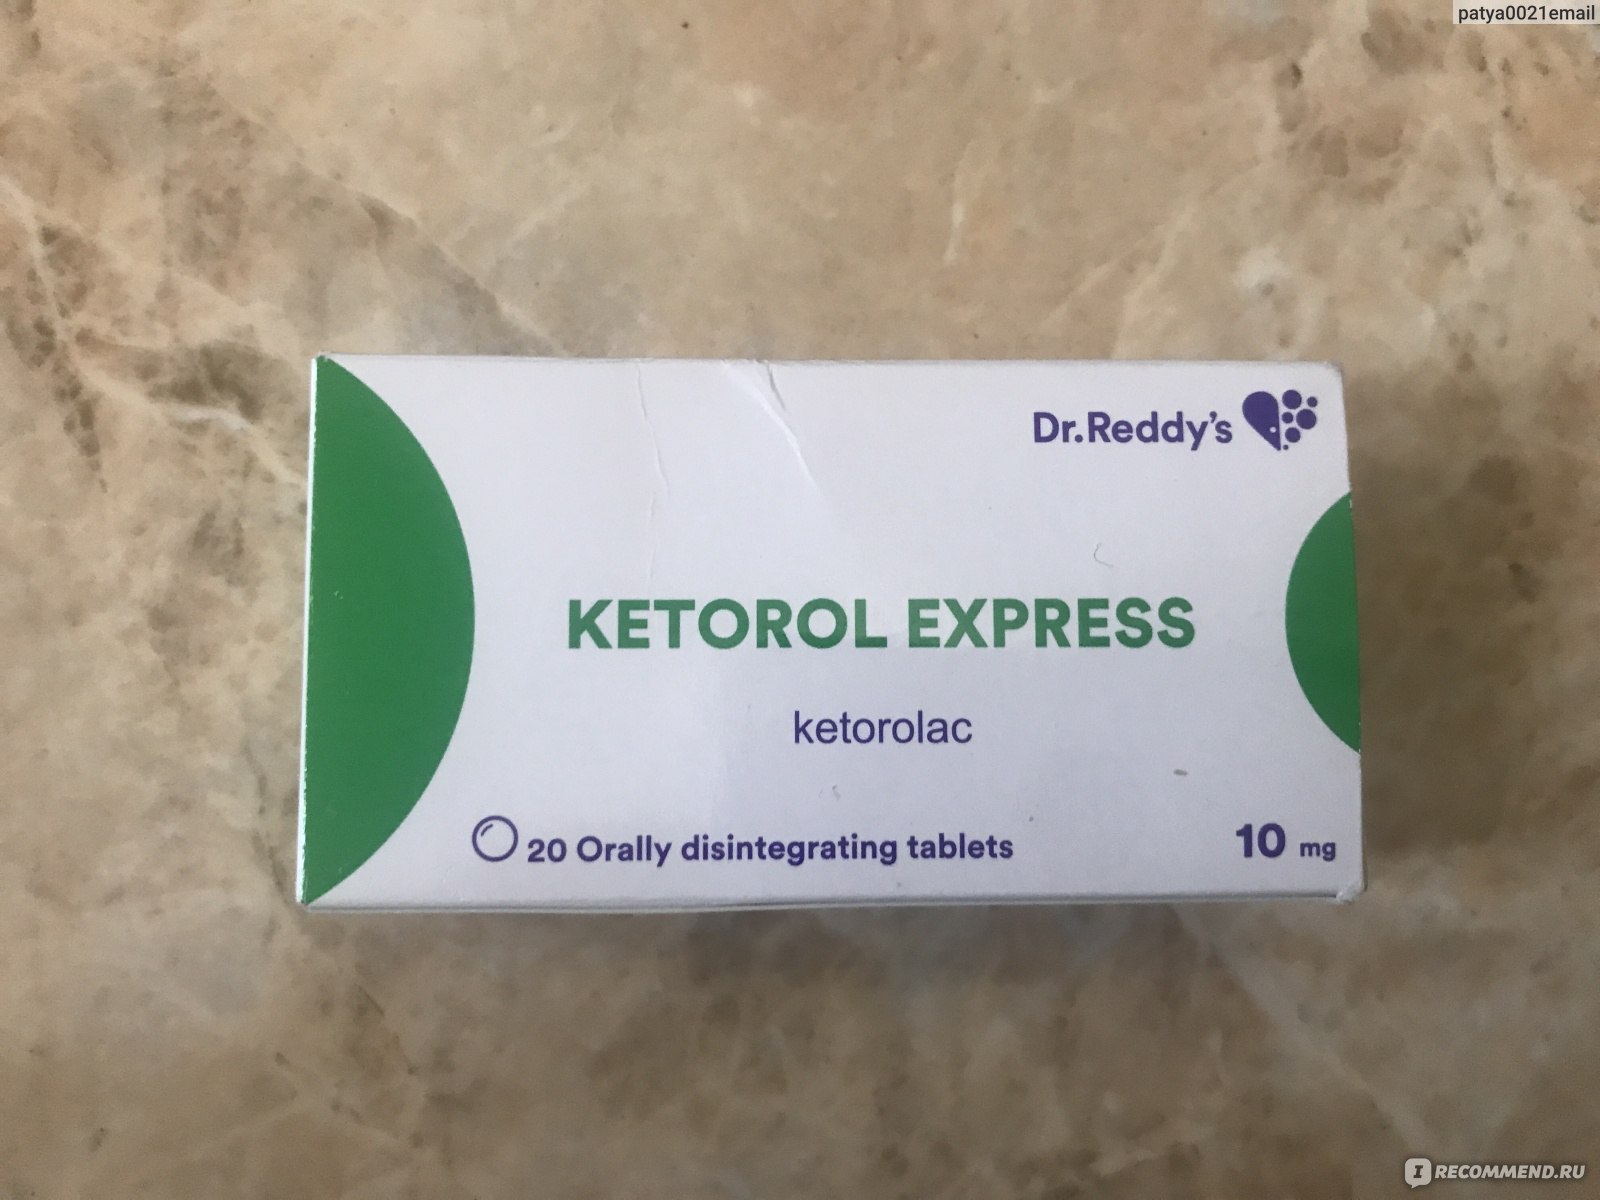 Обезболивающие таблетки кеторол экспресс